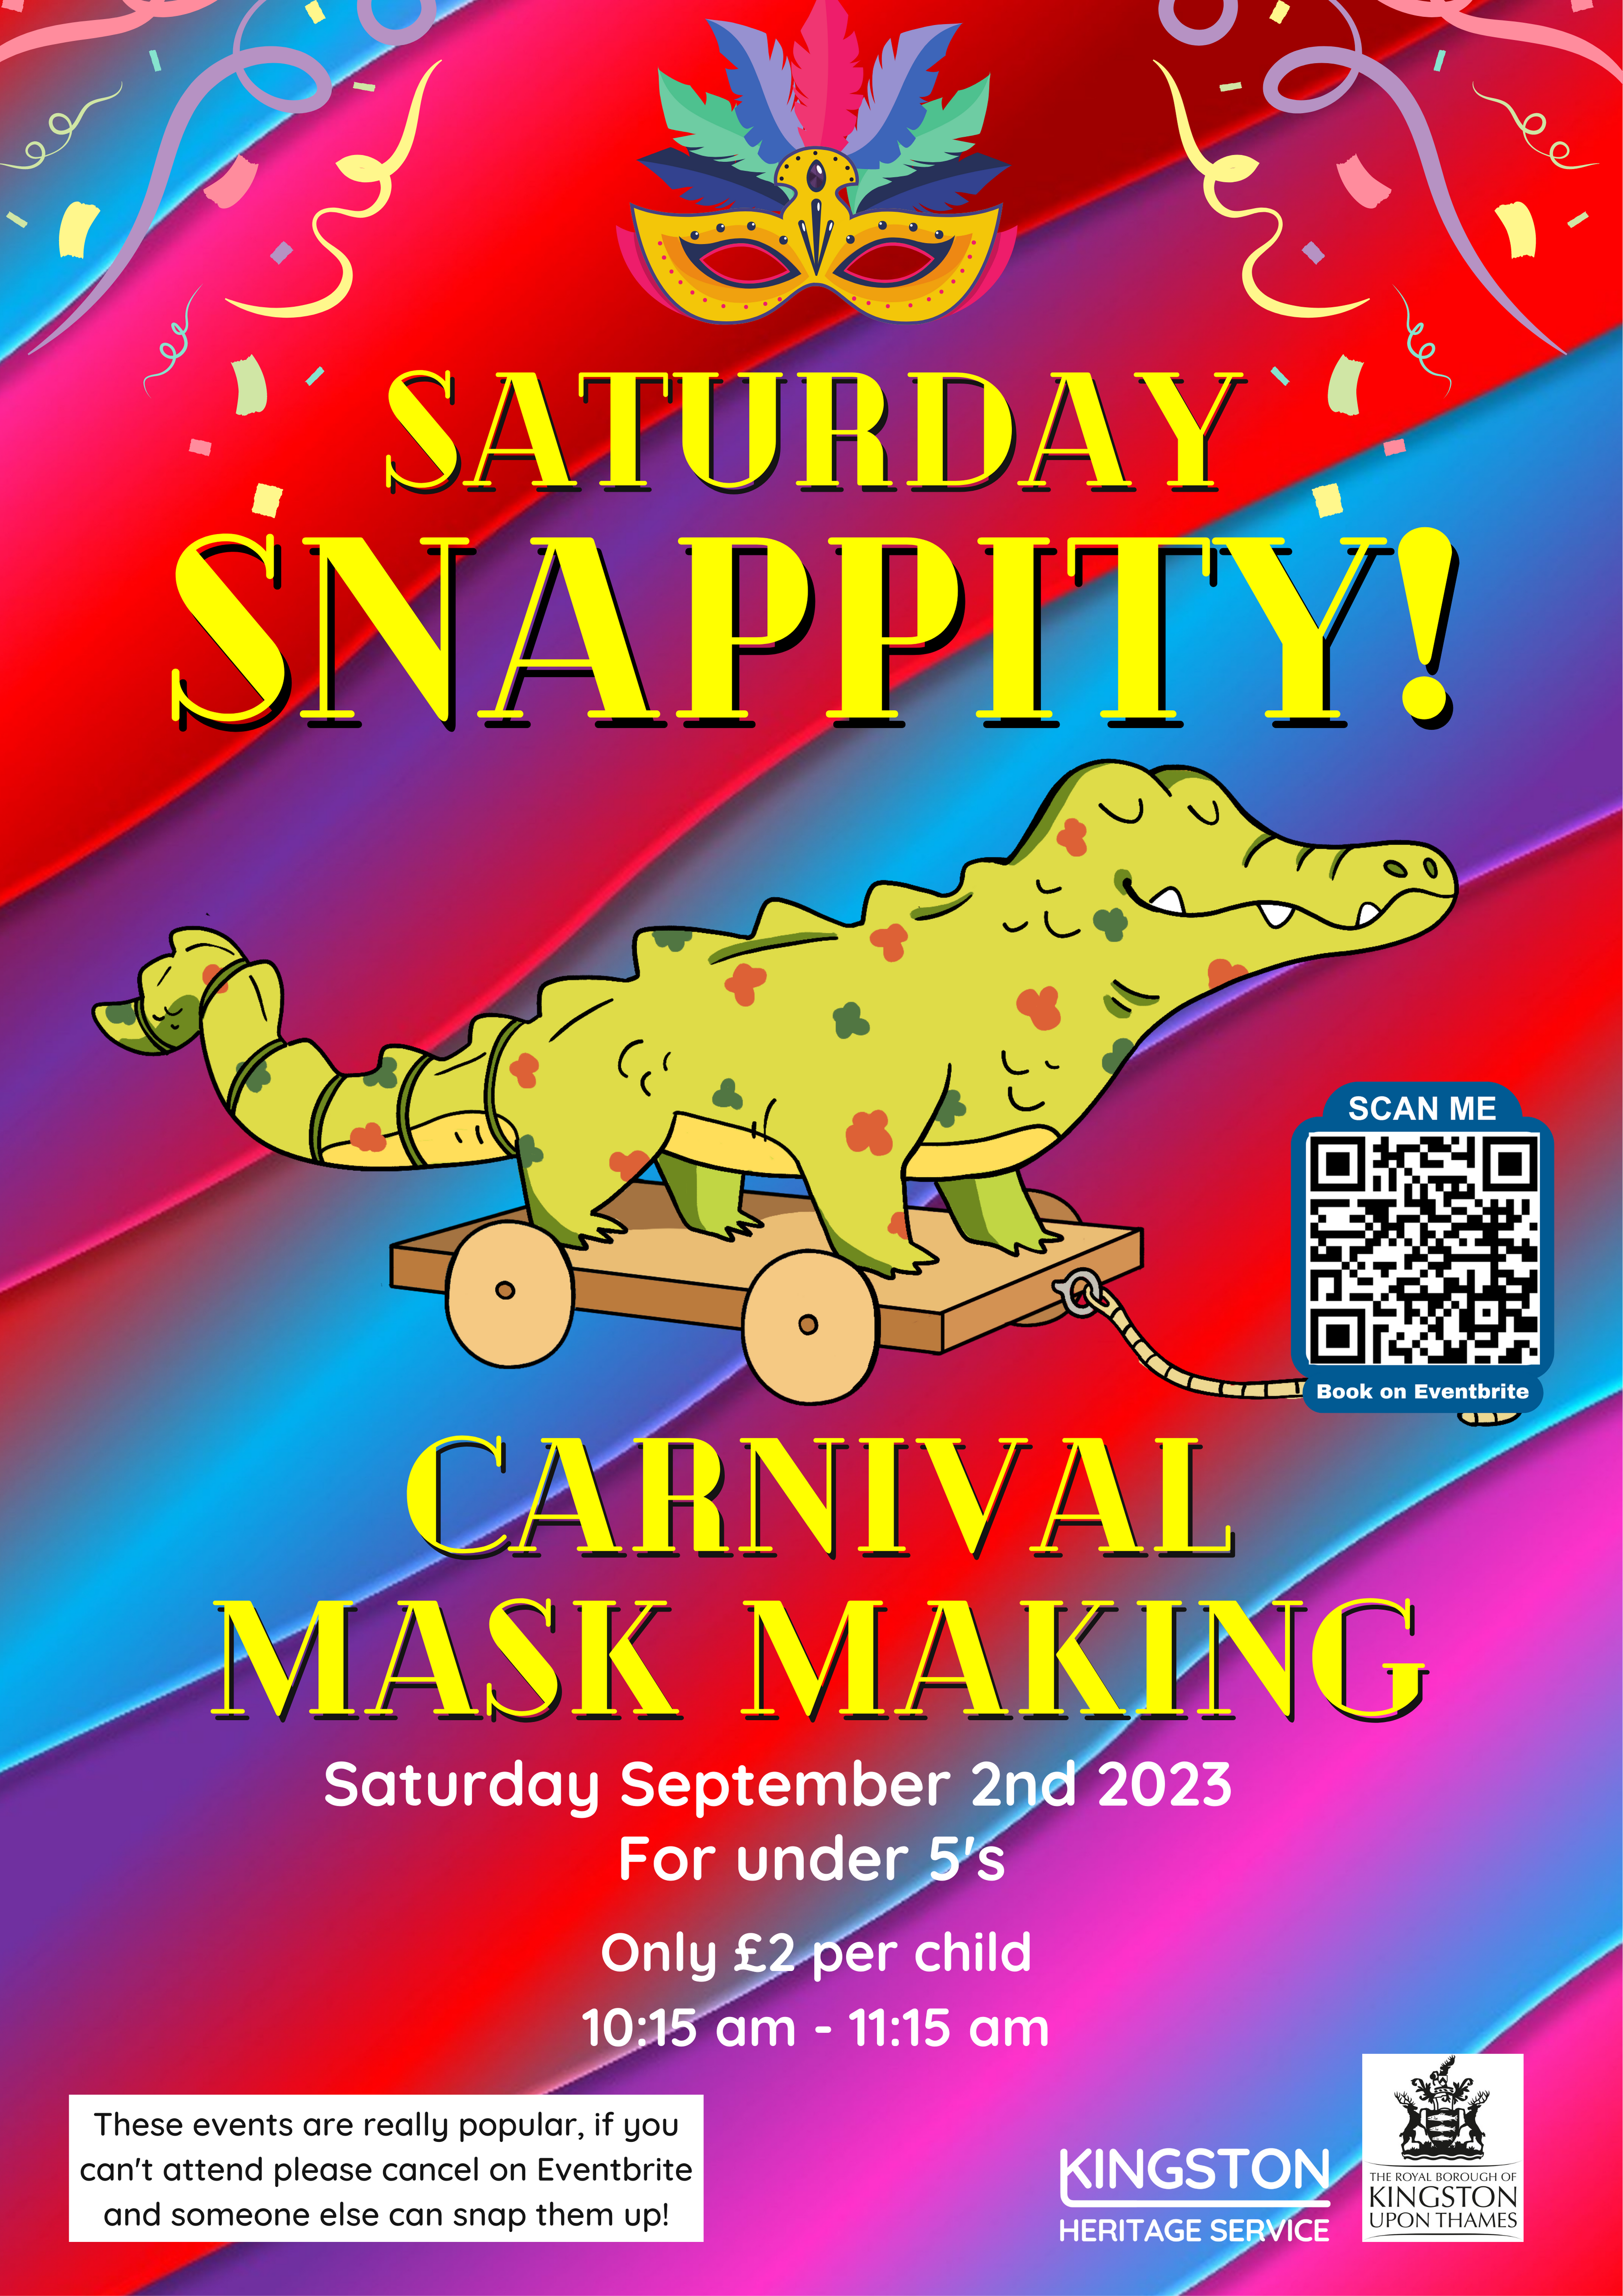 Snappity Carnival mask making